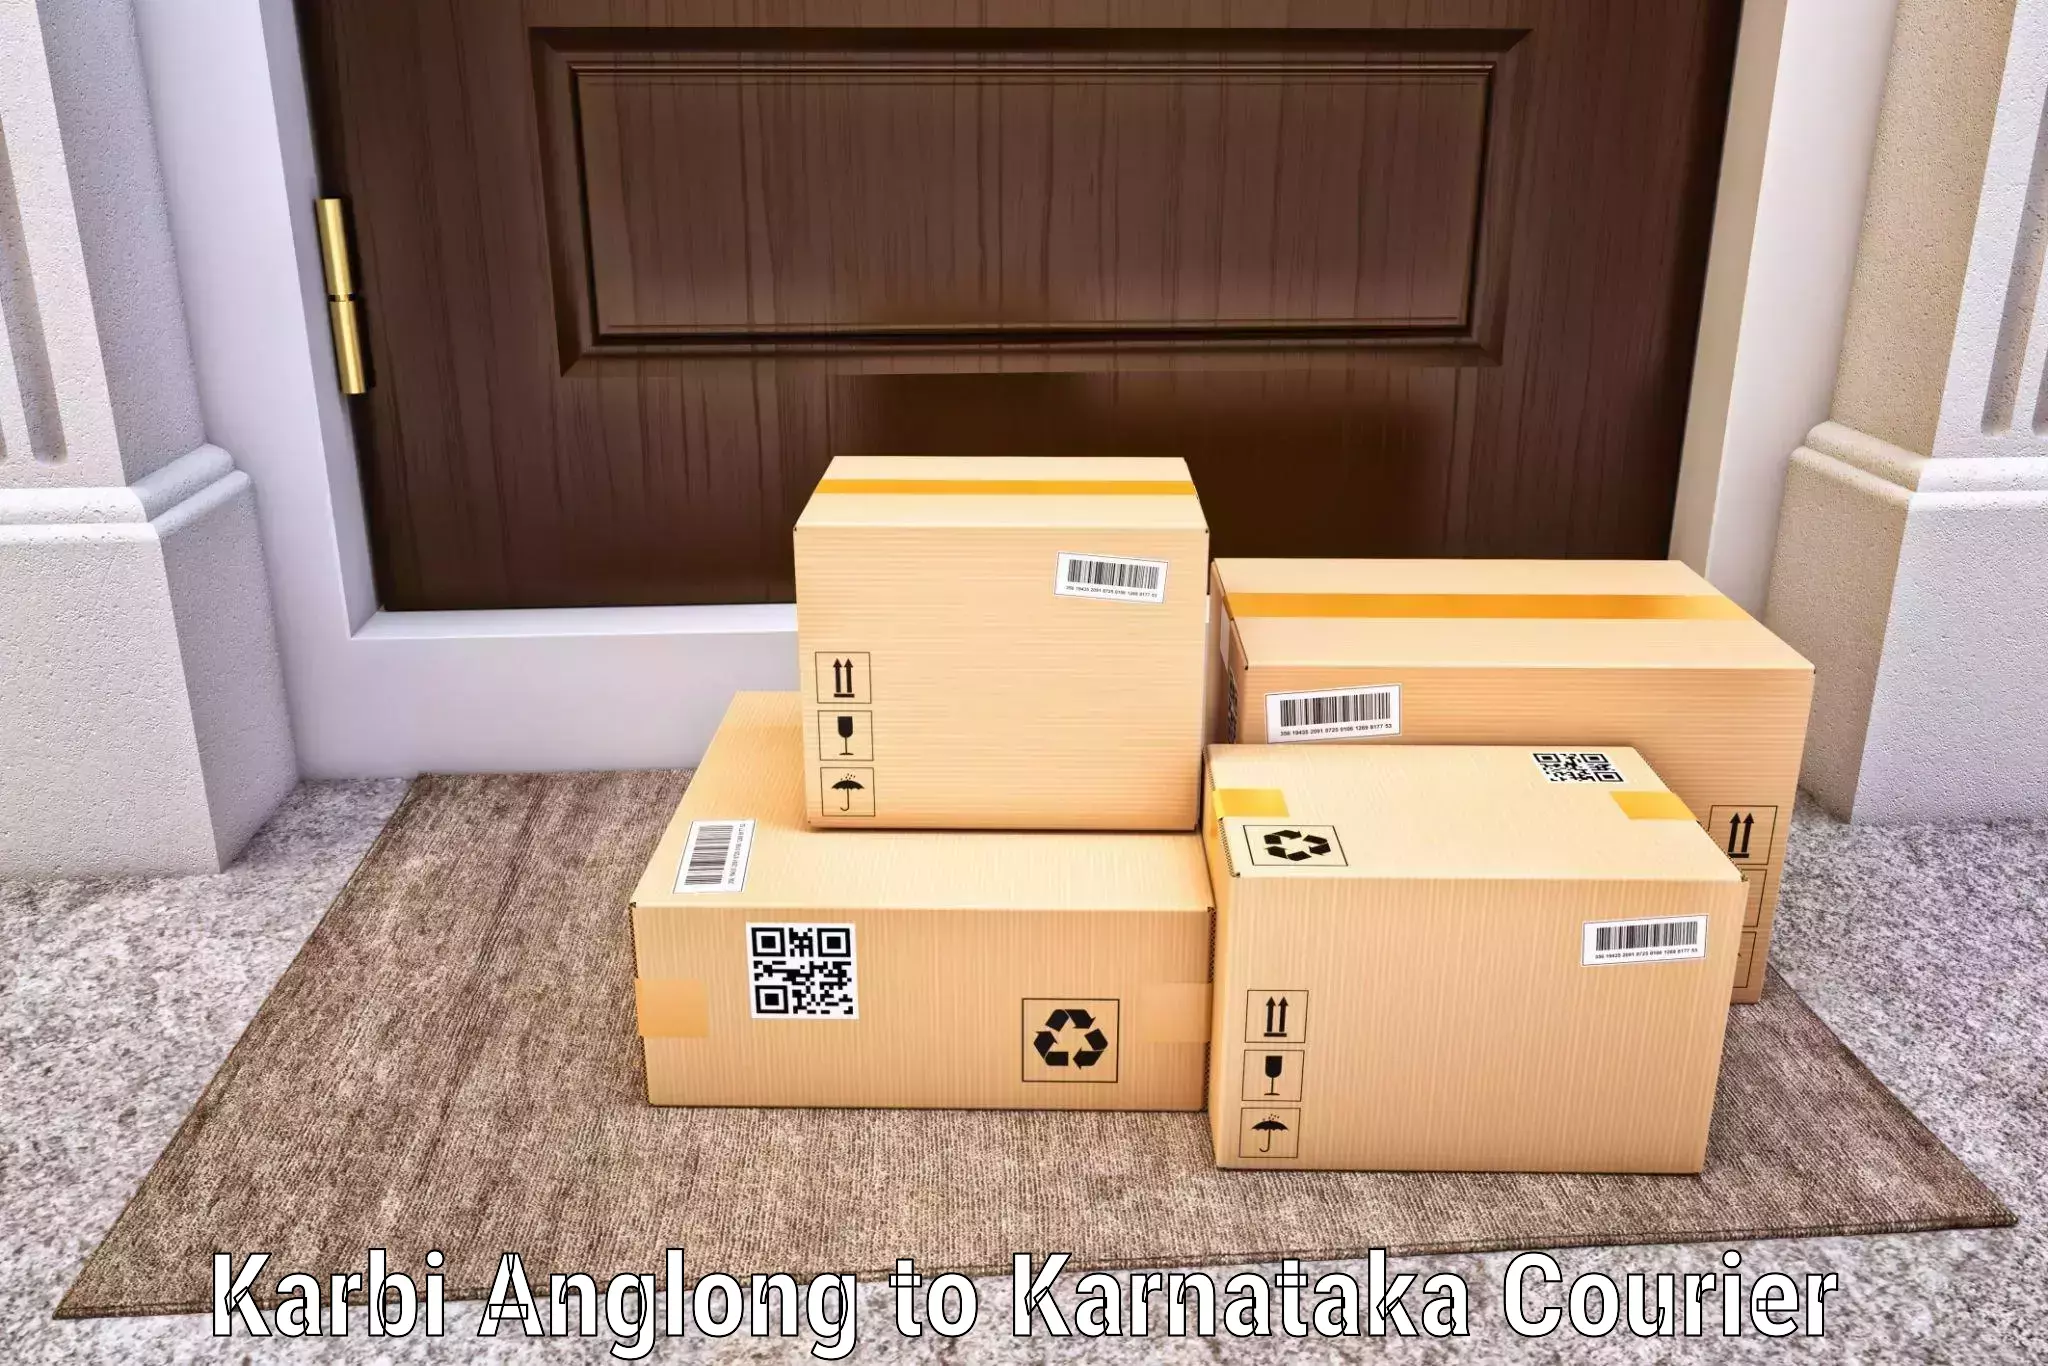 Nationwide delivery network Karbi Anglong to Bidar